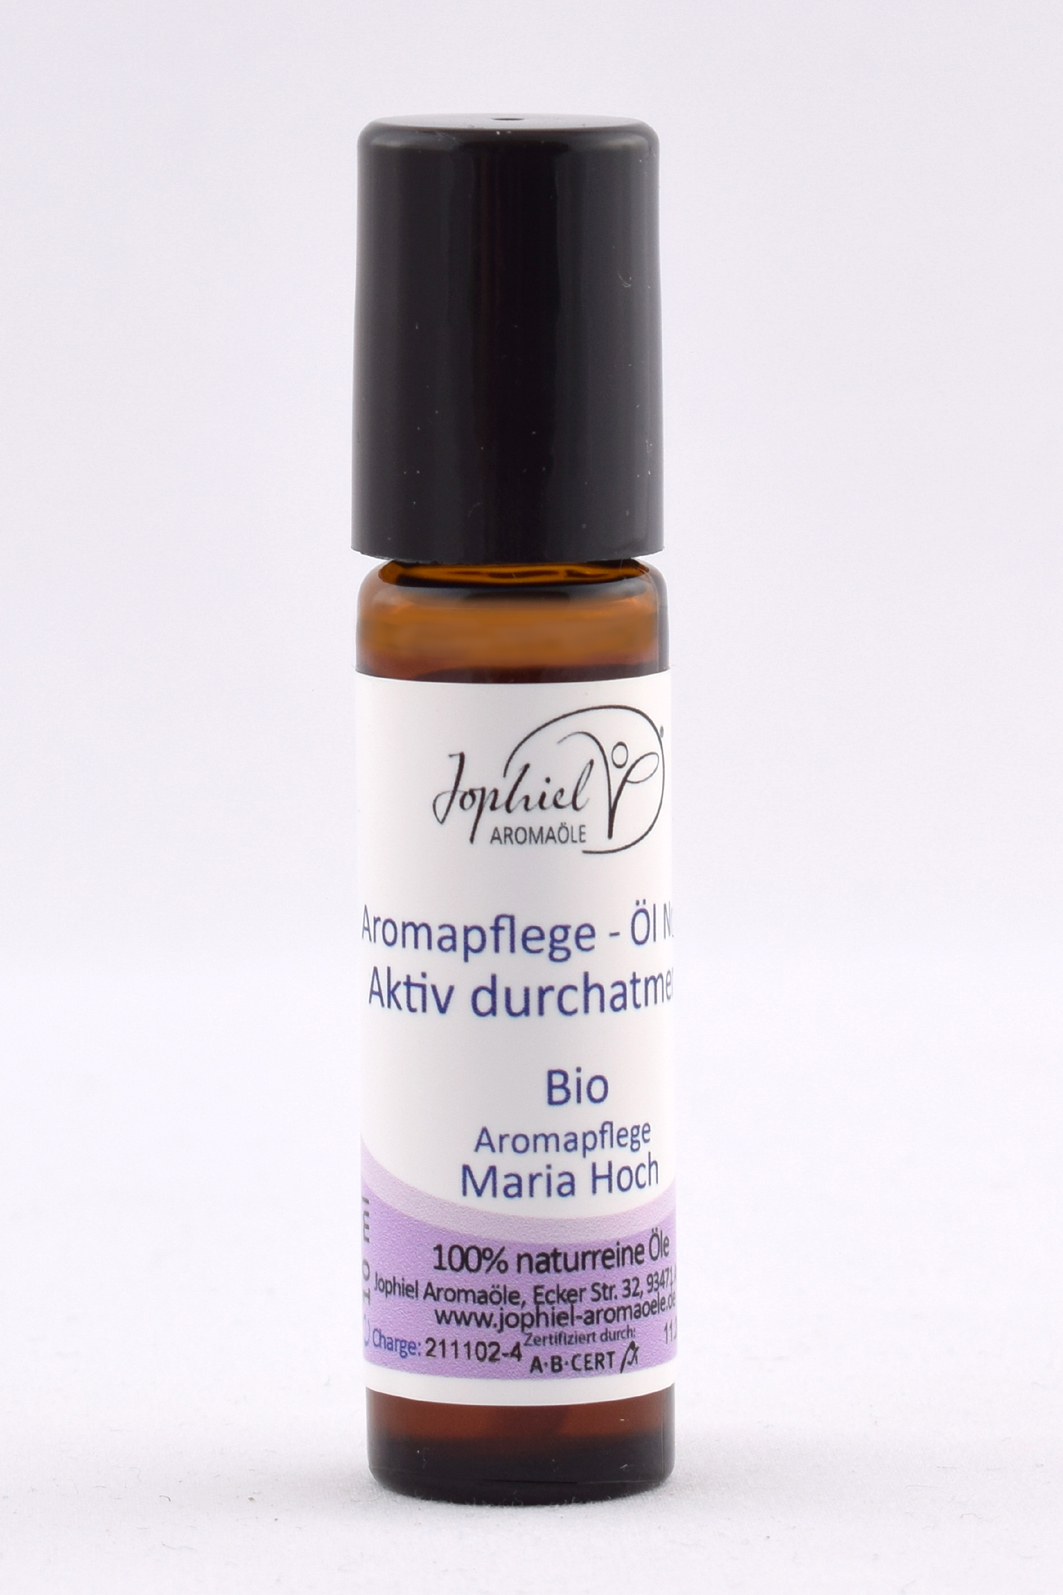 Aromapflege-Öl Nr. 04 Aktiv durchatmen im Roll-on 10 ml  Bio